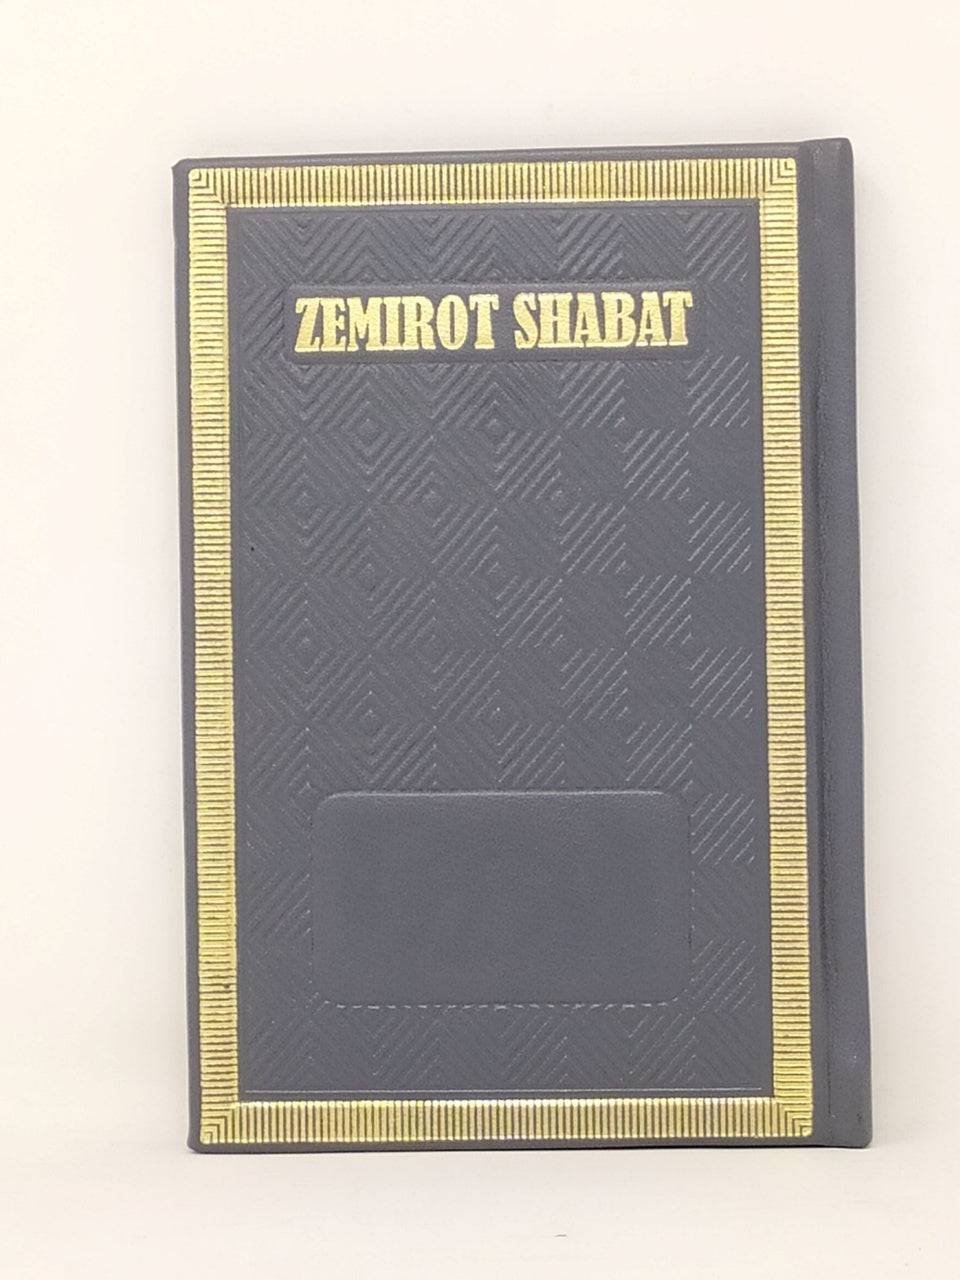 Zemirot Shabat Hebreo-Fonetica Varios Colores - Libreria Jerusalem Centro